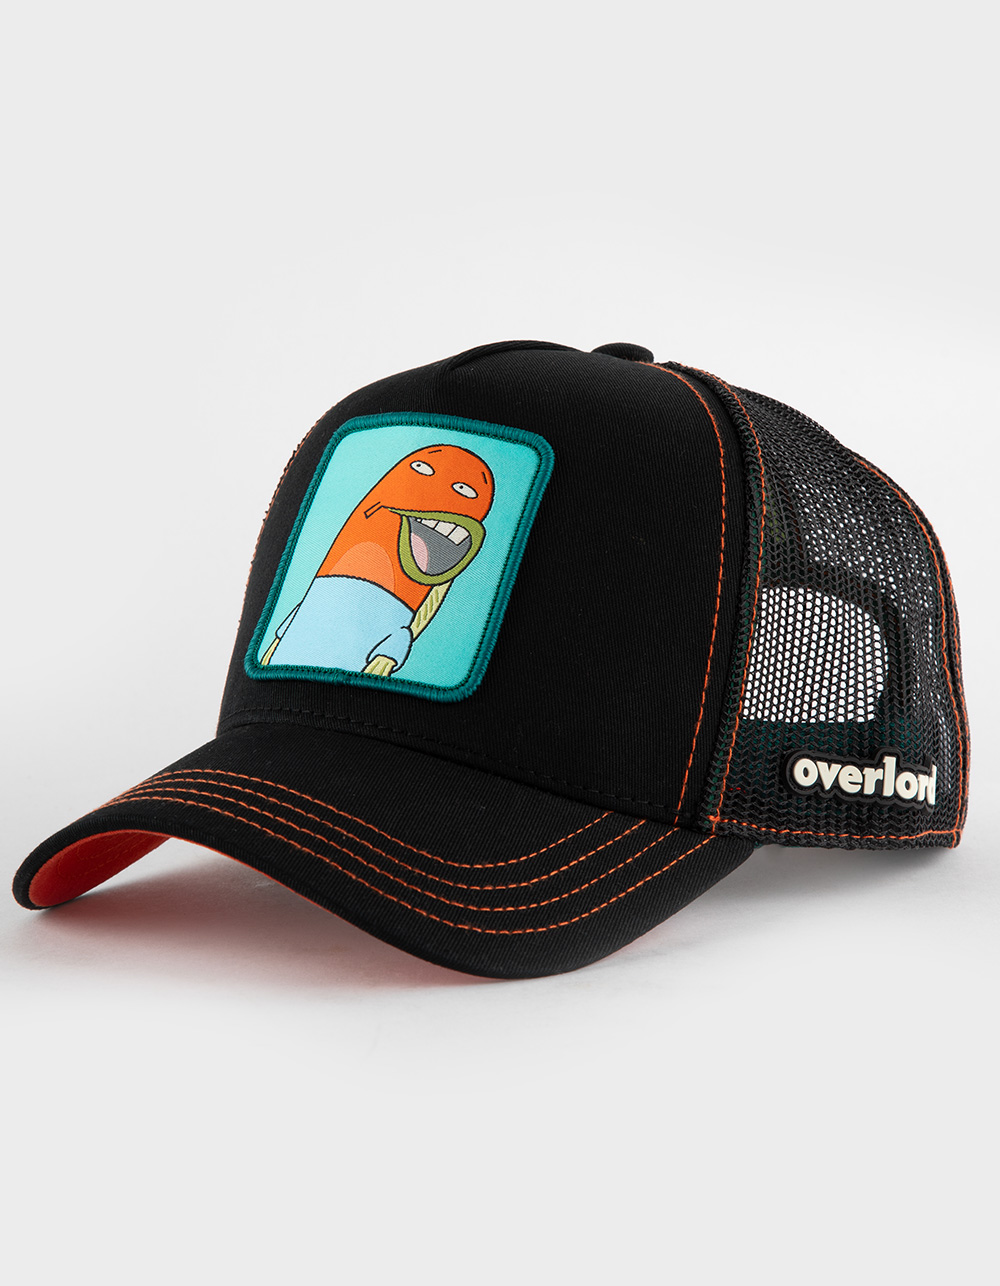 OVERLORD x SpongeBob SquarePants Load Of Barnacles Trucker Hat